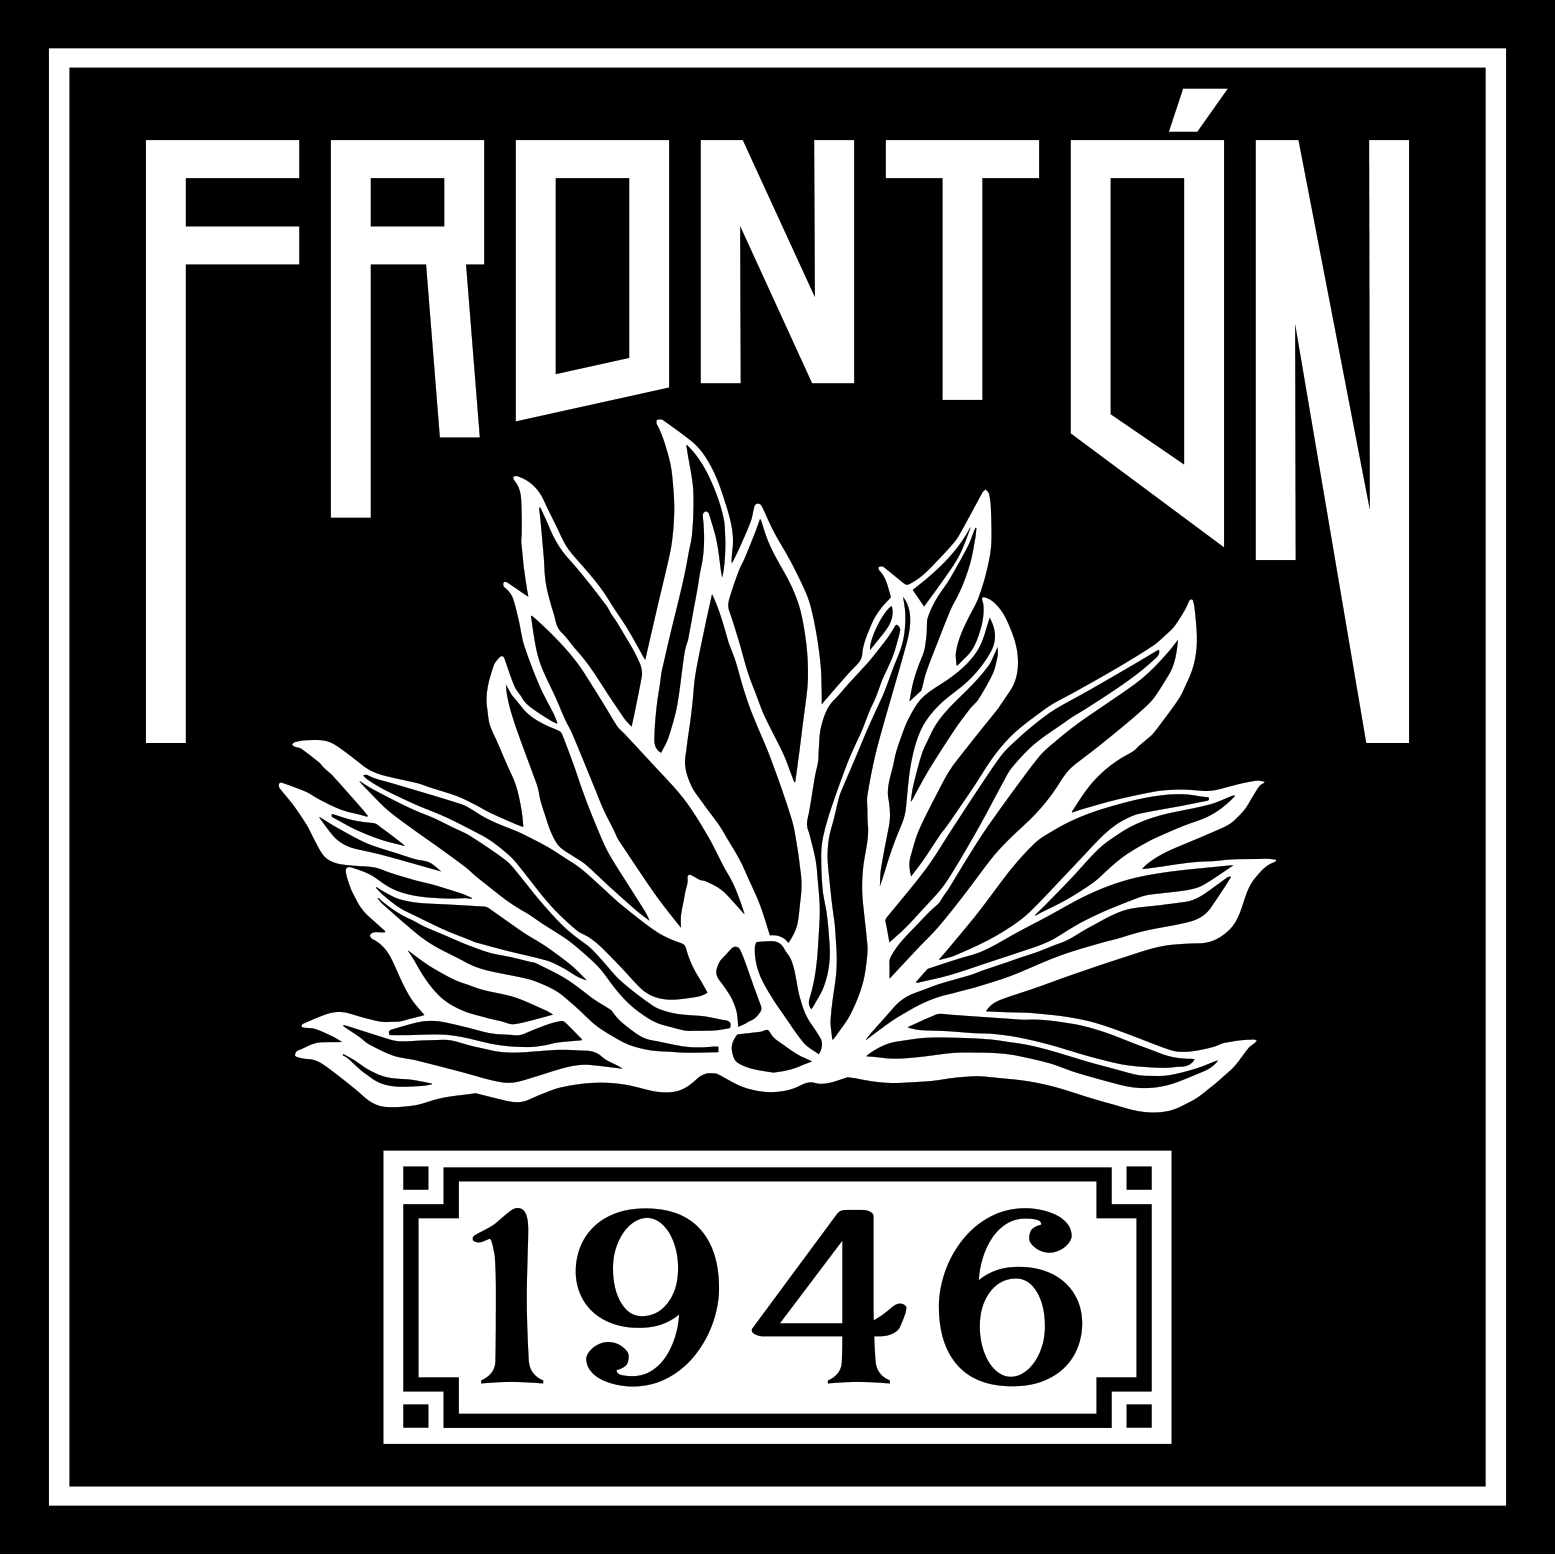 Fronton 1946